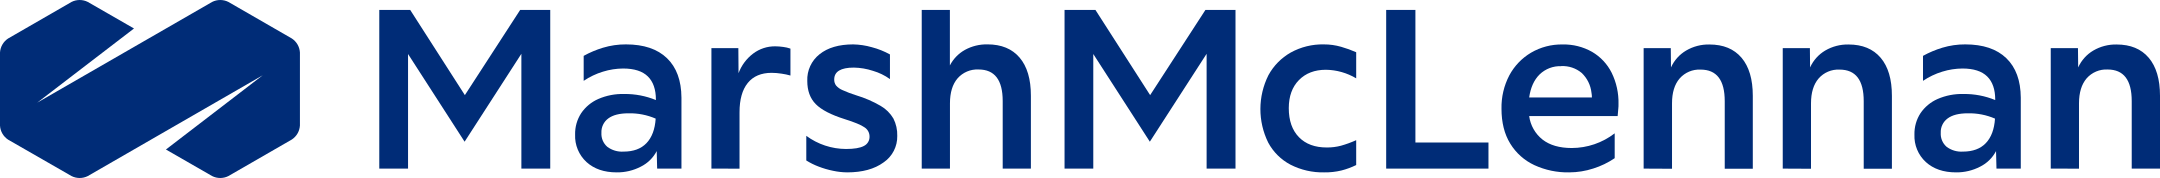 Marsh & McLennan Logo.